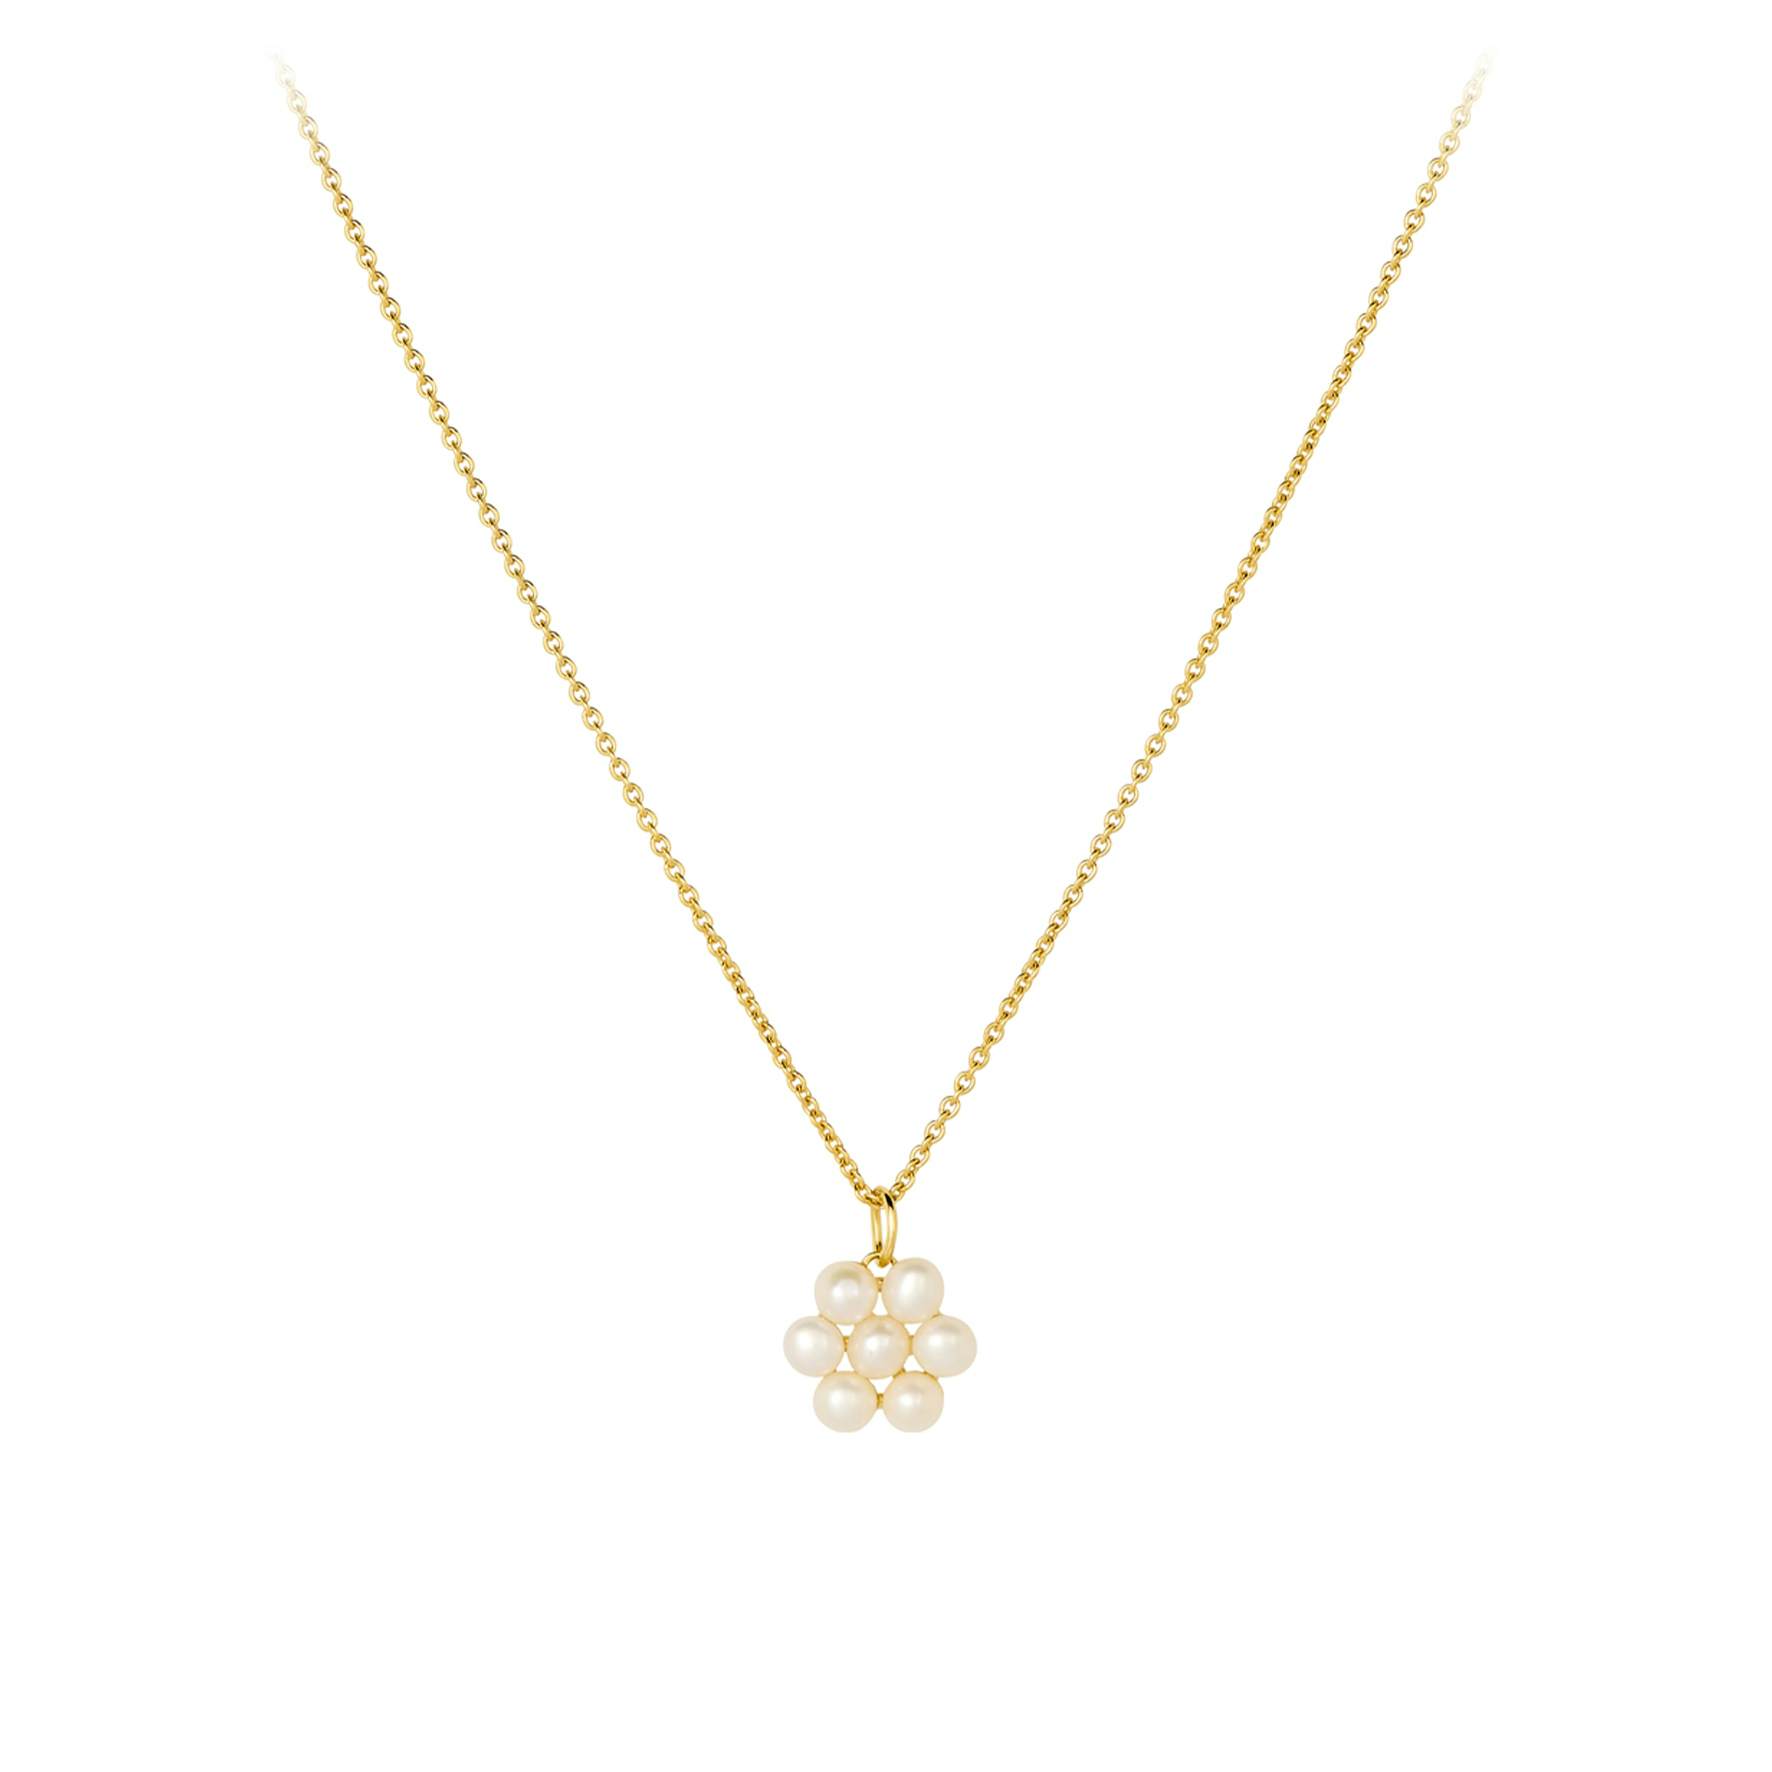 Ocean Bloom Necklace von Pernille Corydon in Vergoldet-Silber Sterling 925